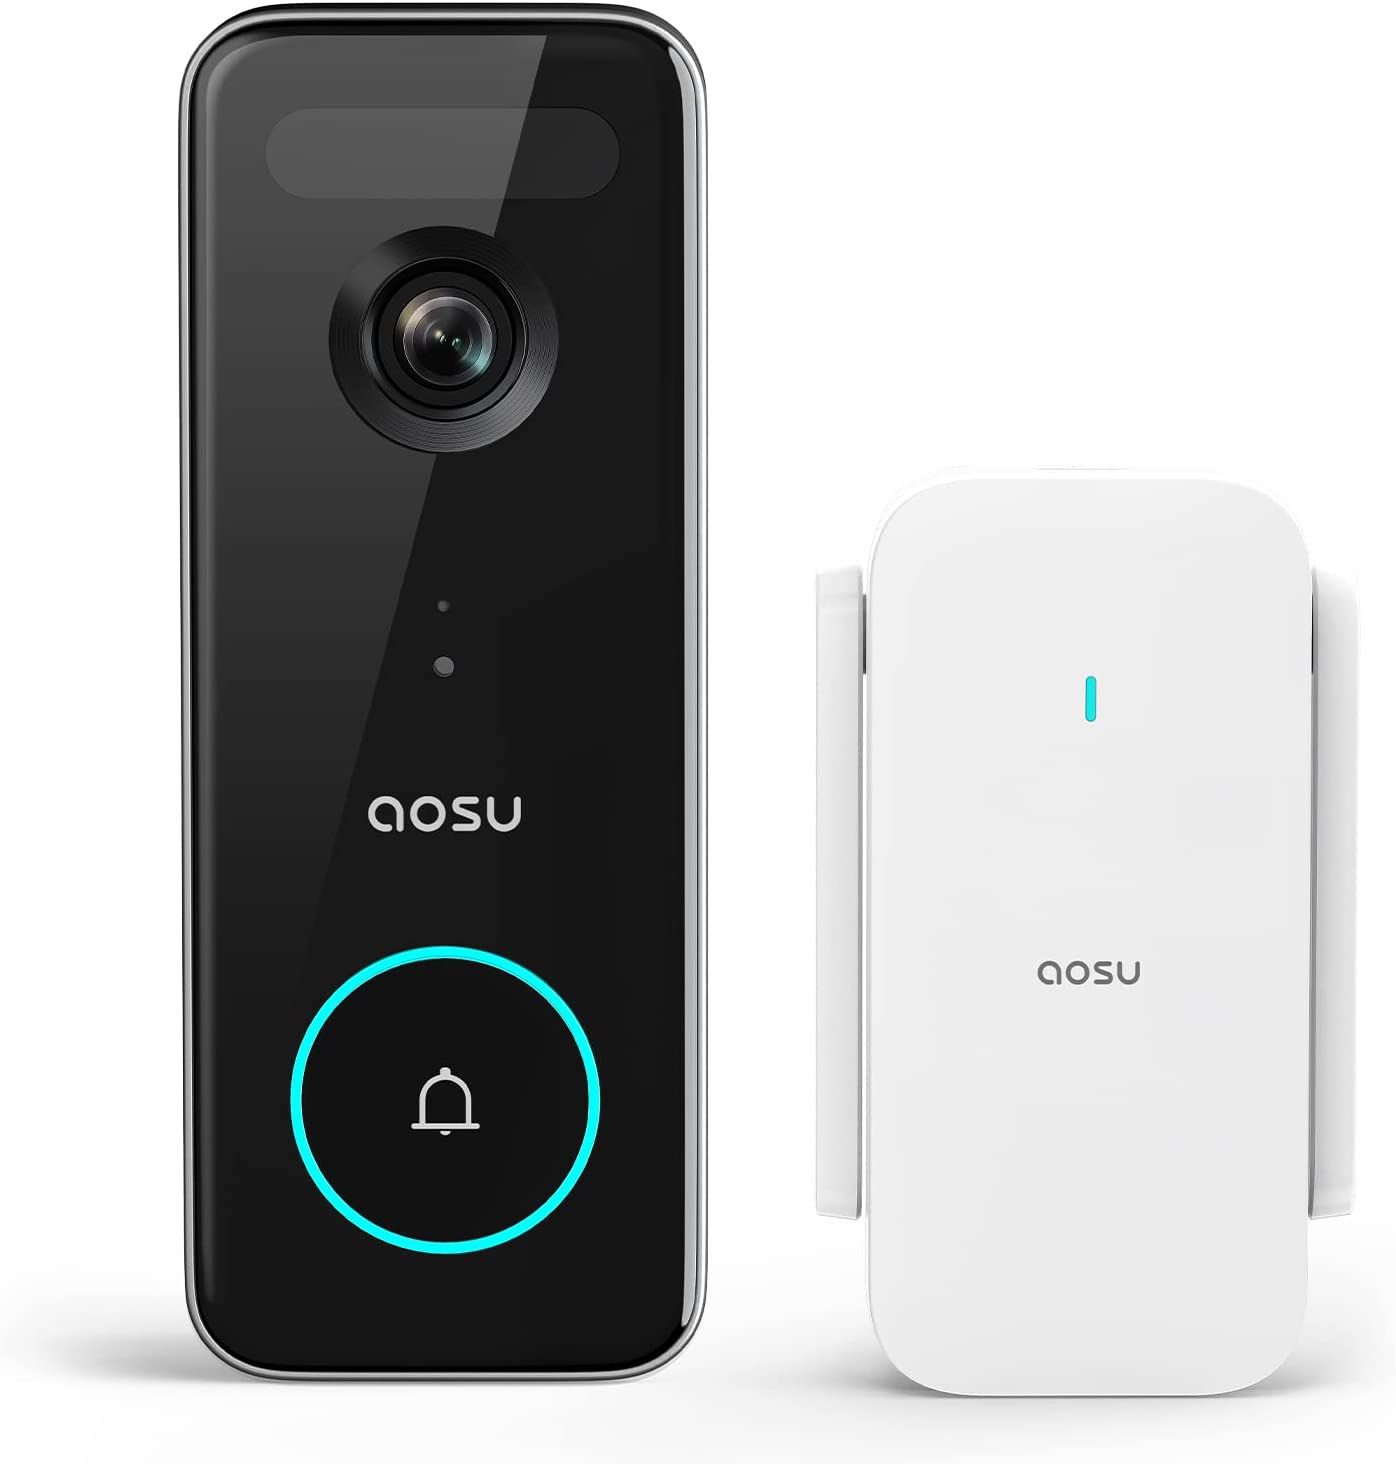 Aosu wireless doorbell camera on a white background